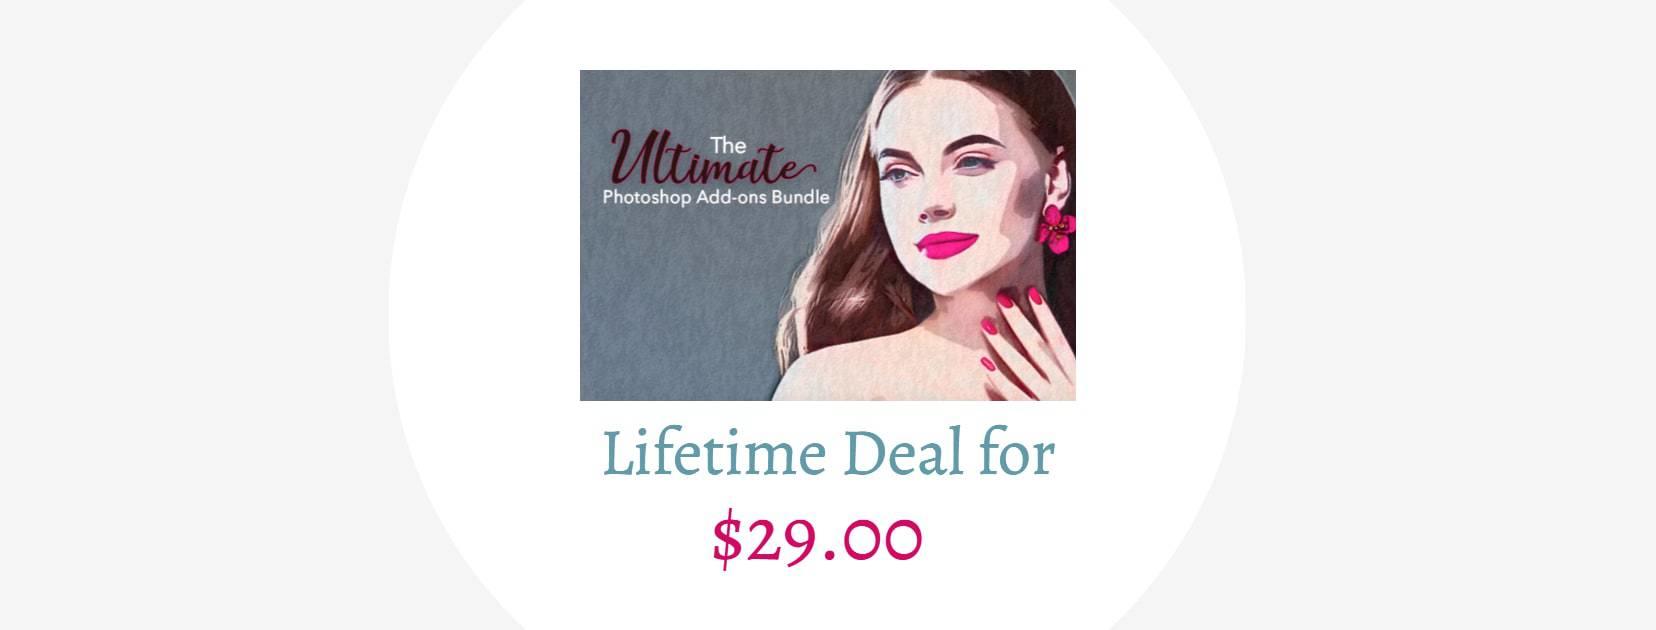 Ultimate Photoshop Lifetime Deal